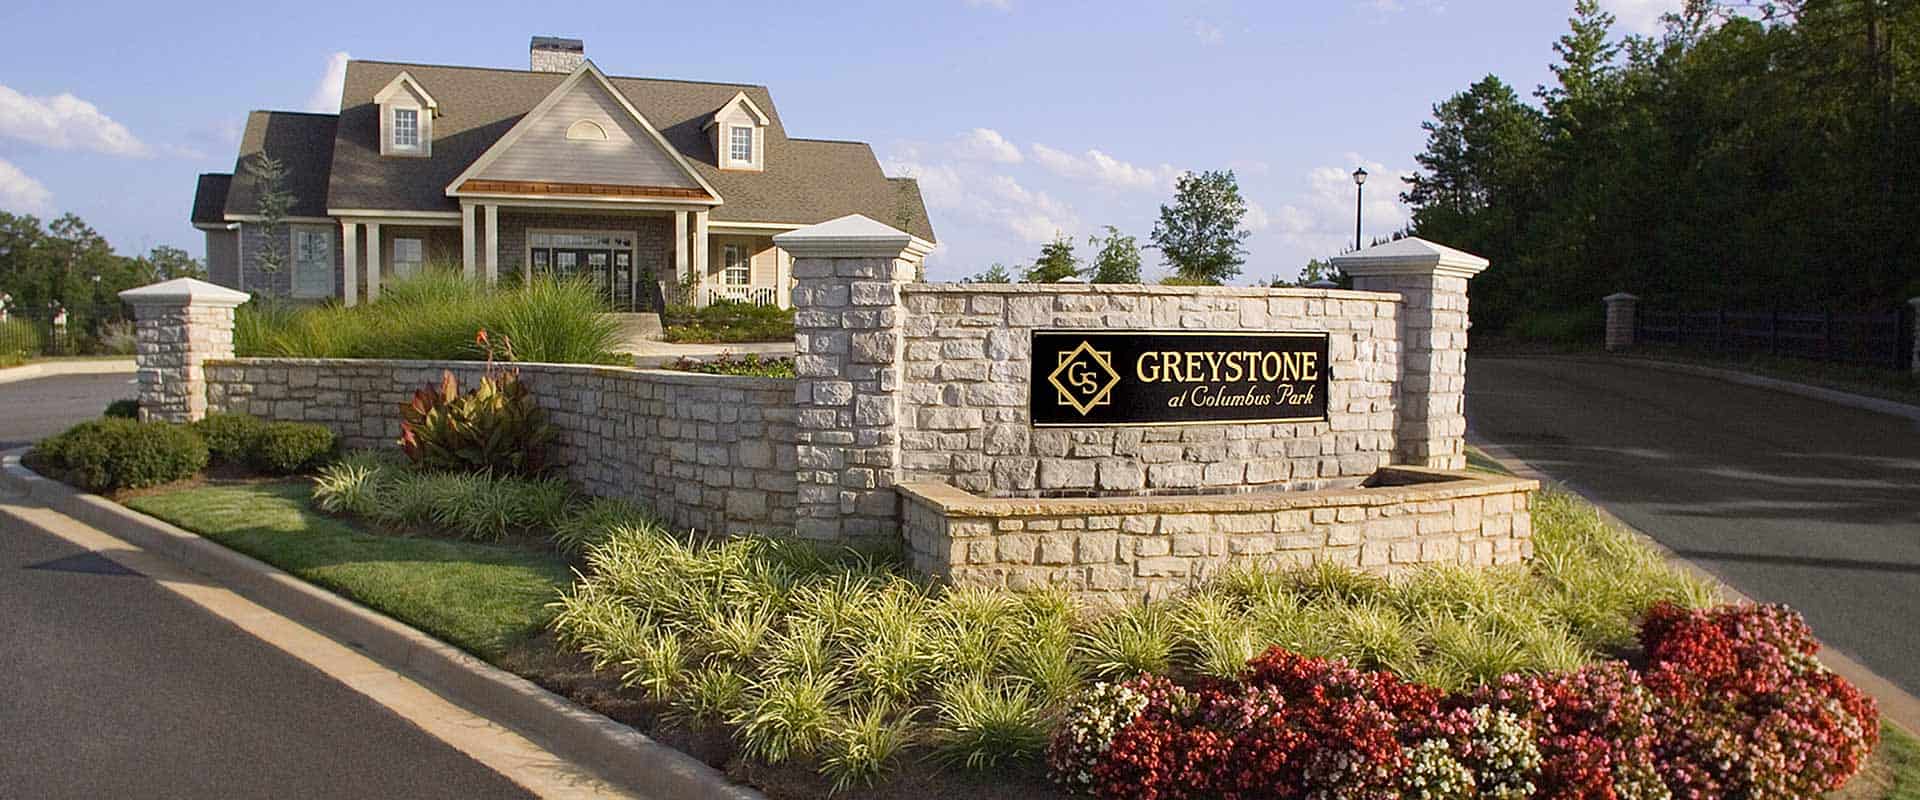 Greystone Properties Columbus, GA Apartments at Columbus Park